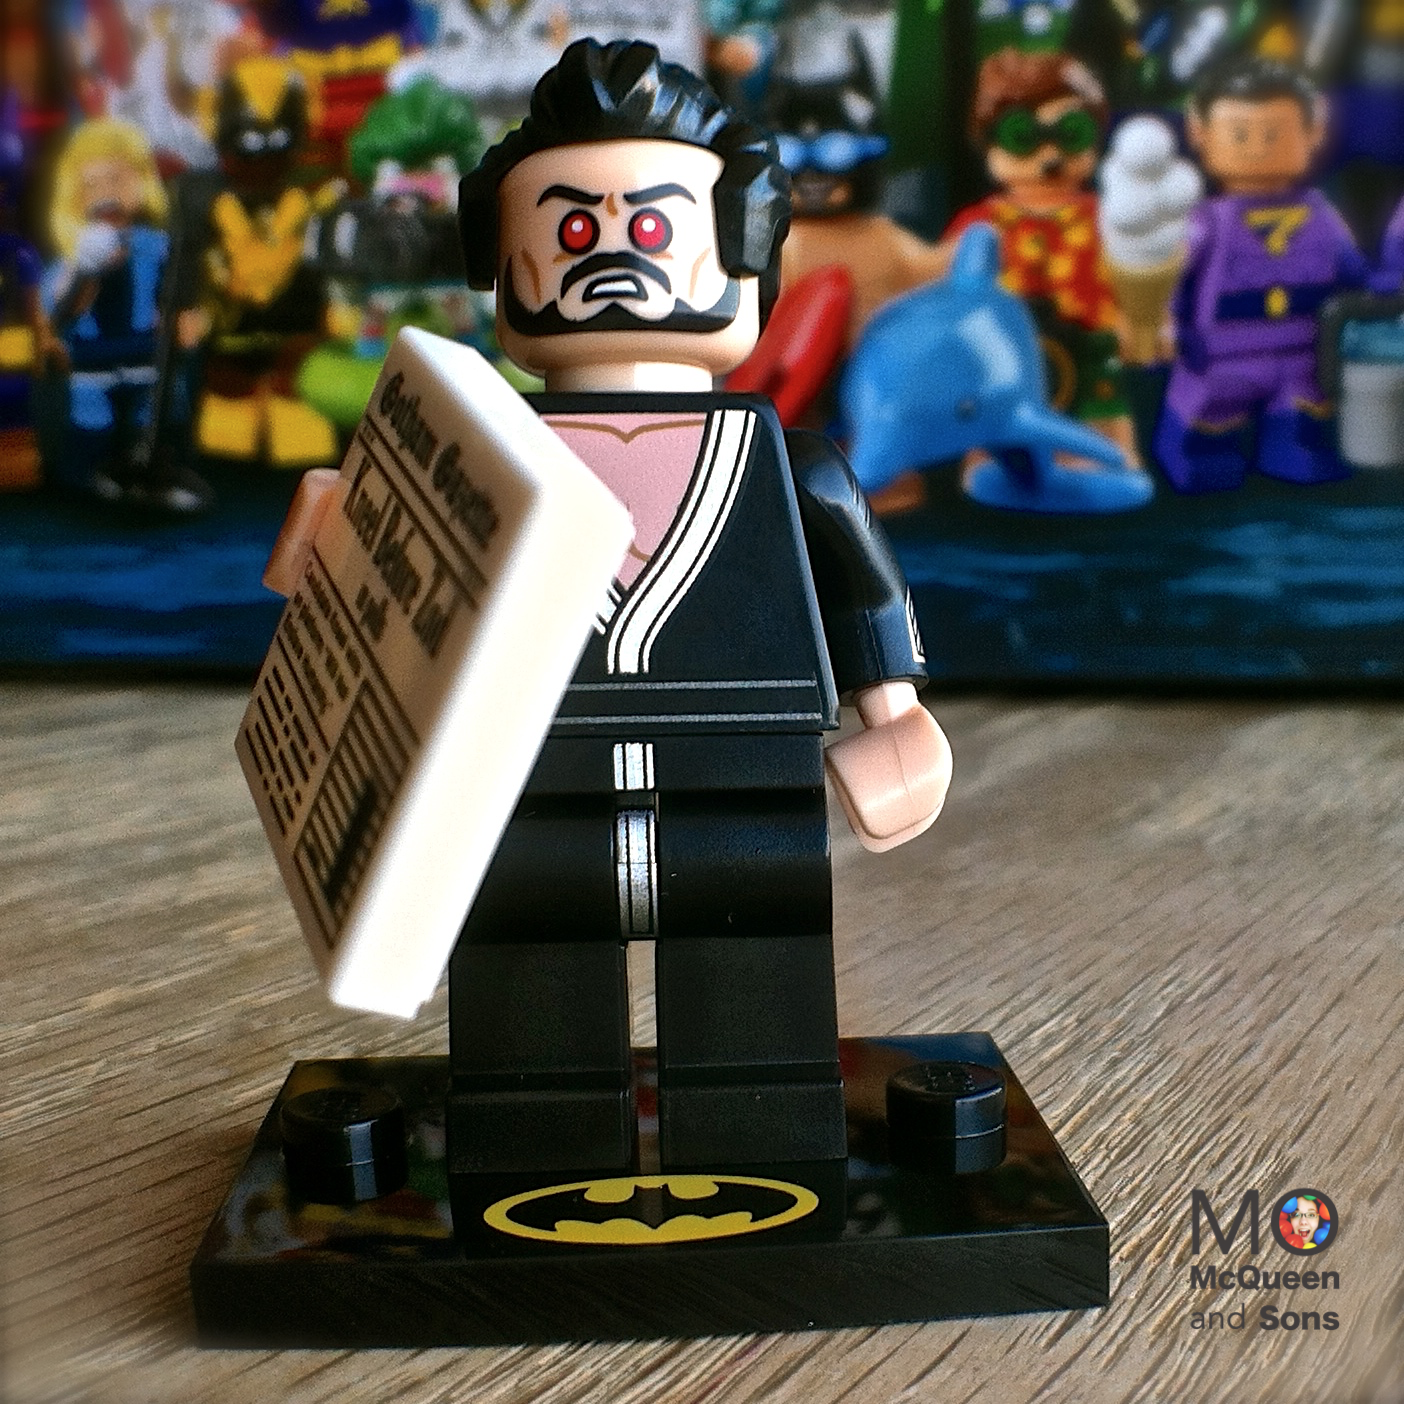 LEGO Batman Movie Series 2 MINIFIGURE SUPERMAN GENERAL ZOD SEALED 71020